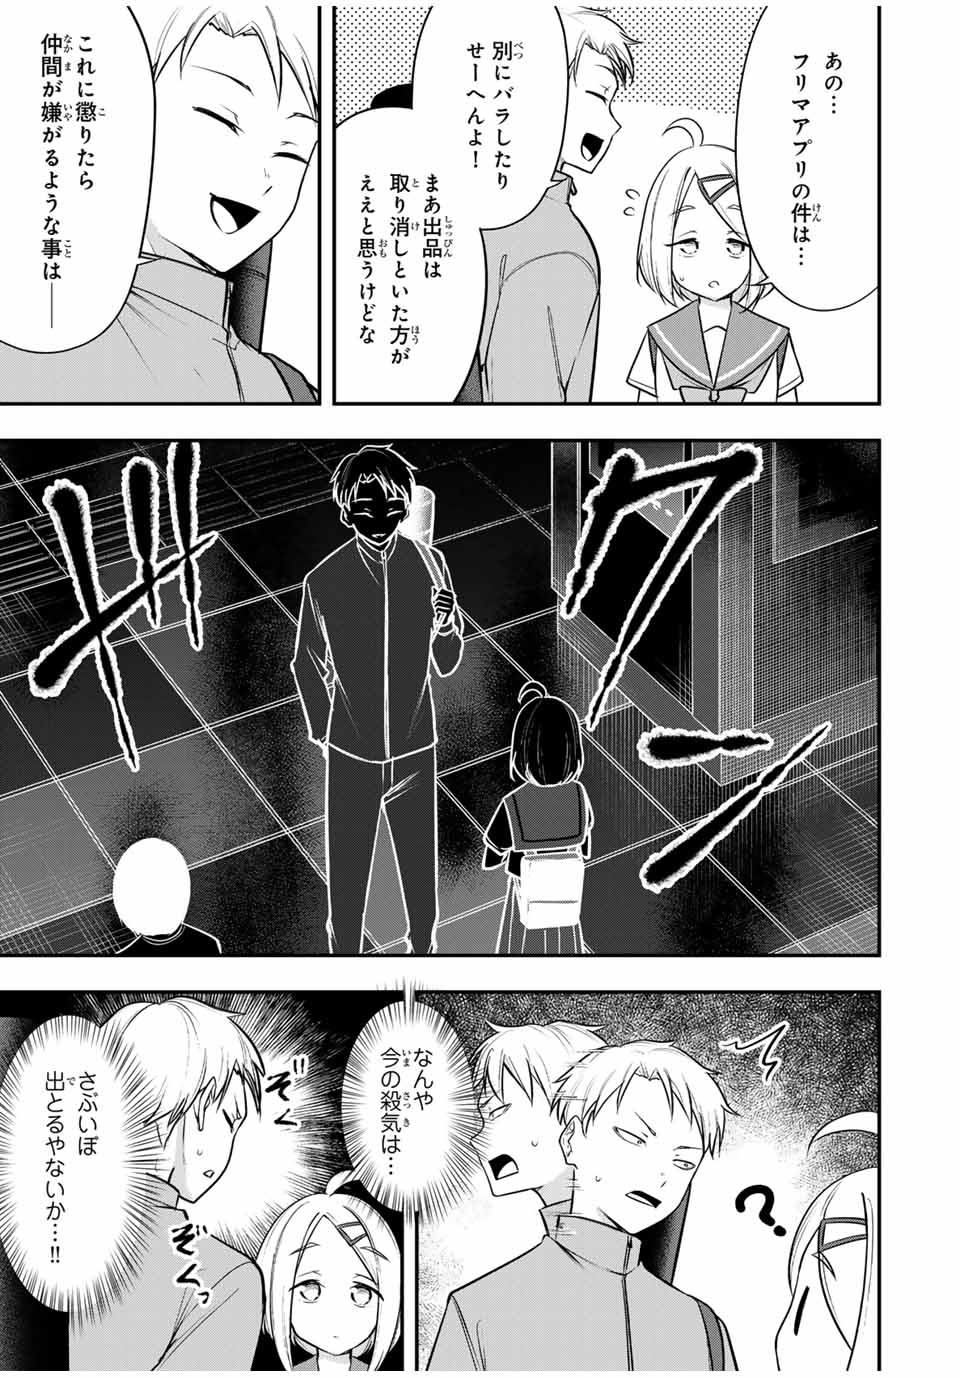 Heroine wa xx Okasegitai - Chapter 13 - Page 7